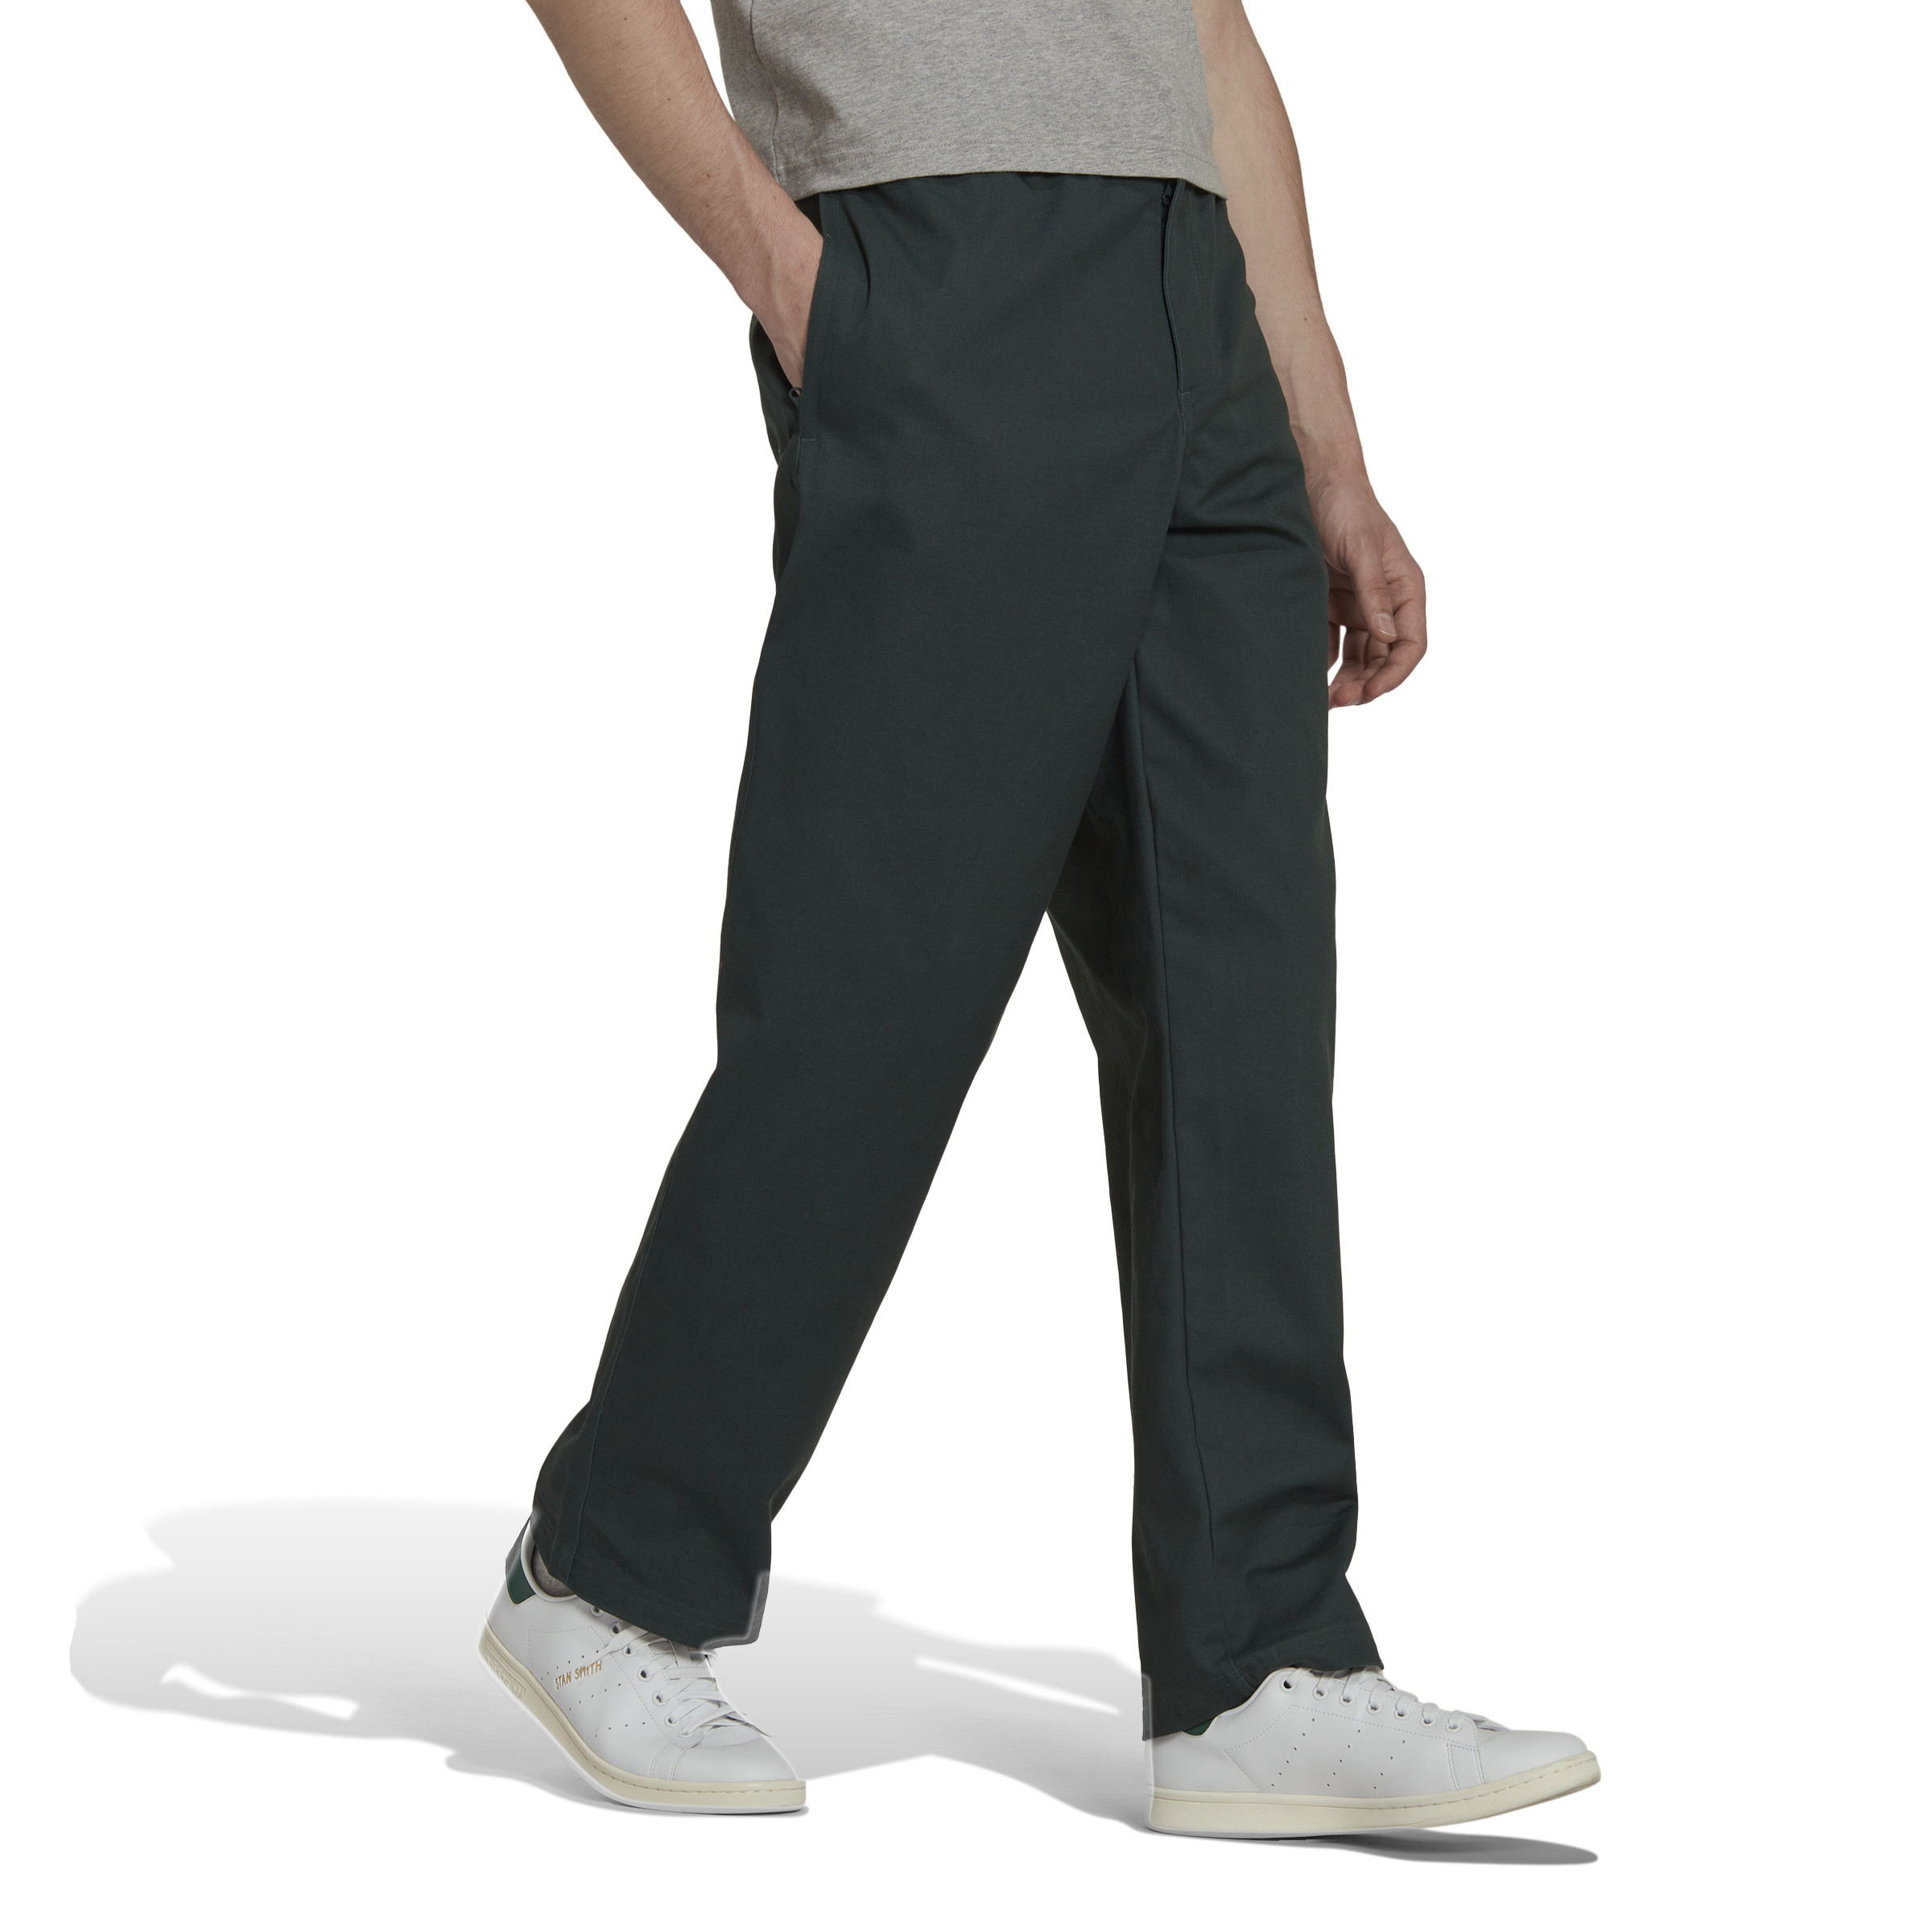 Adidas - Pantaloni adicolor chino, Verde scuro, large image number 2